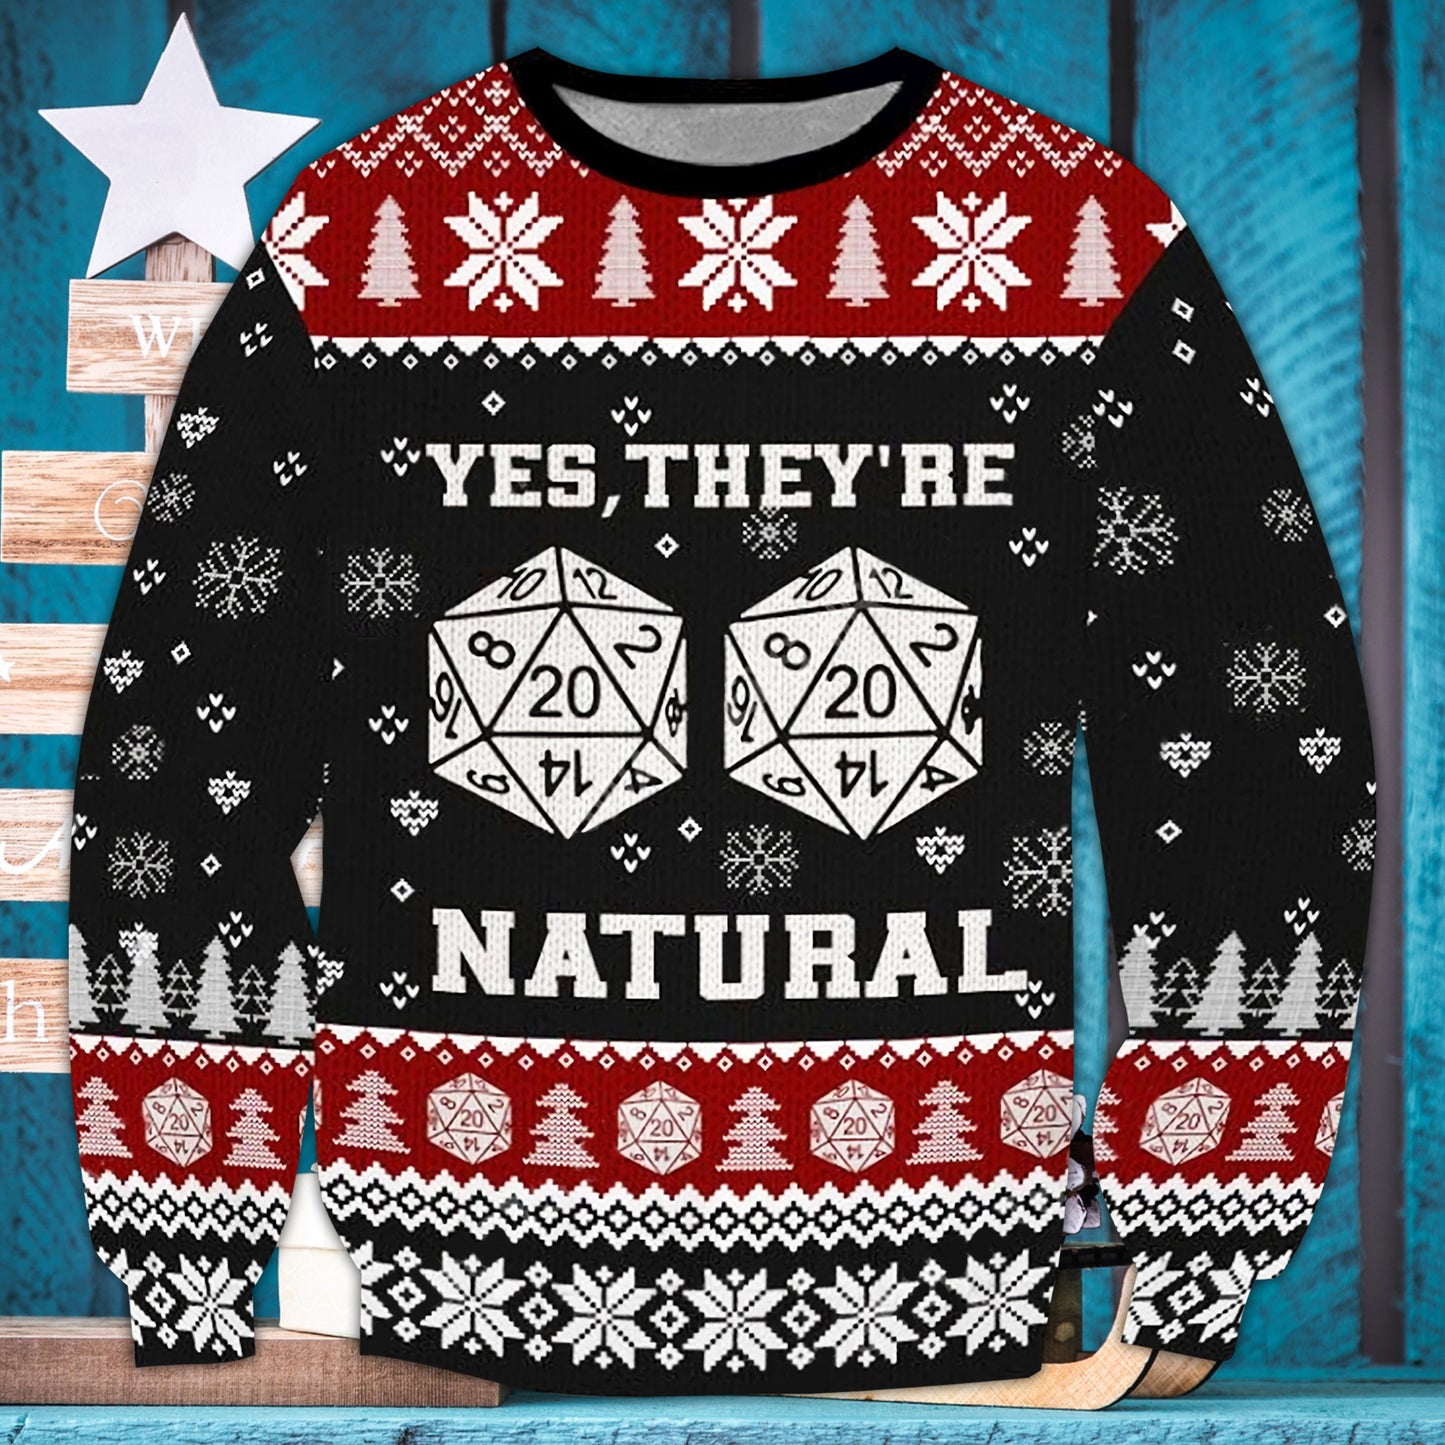 All-Over Print Sleeve Sweatshirt DnD Natural Xmas lqt lbs